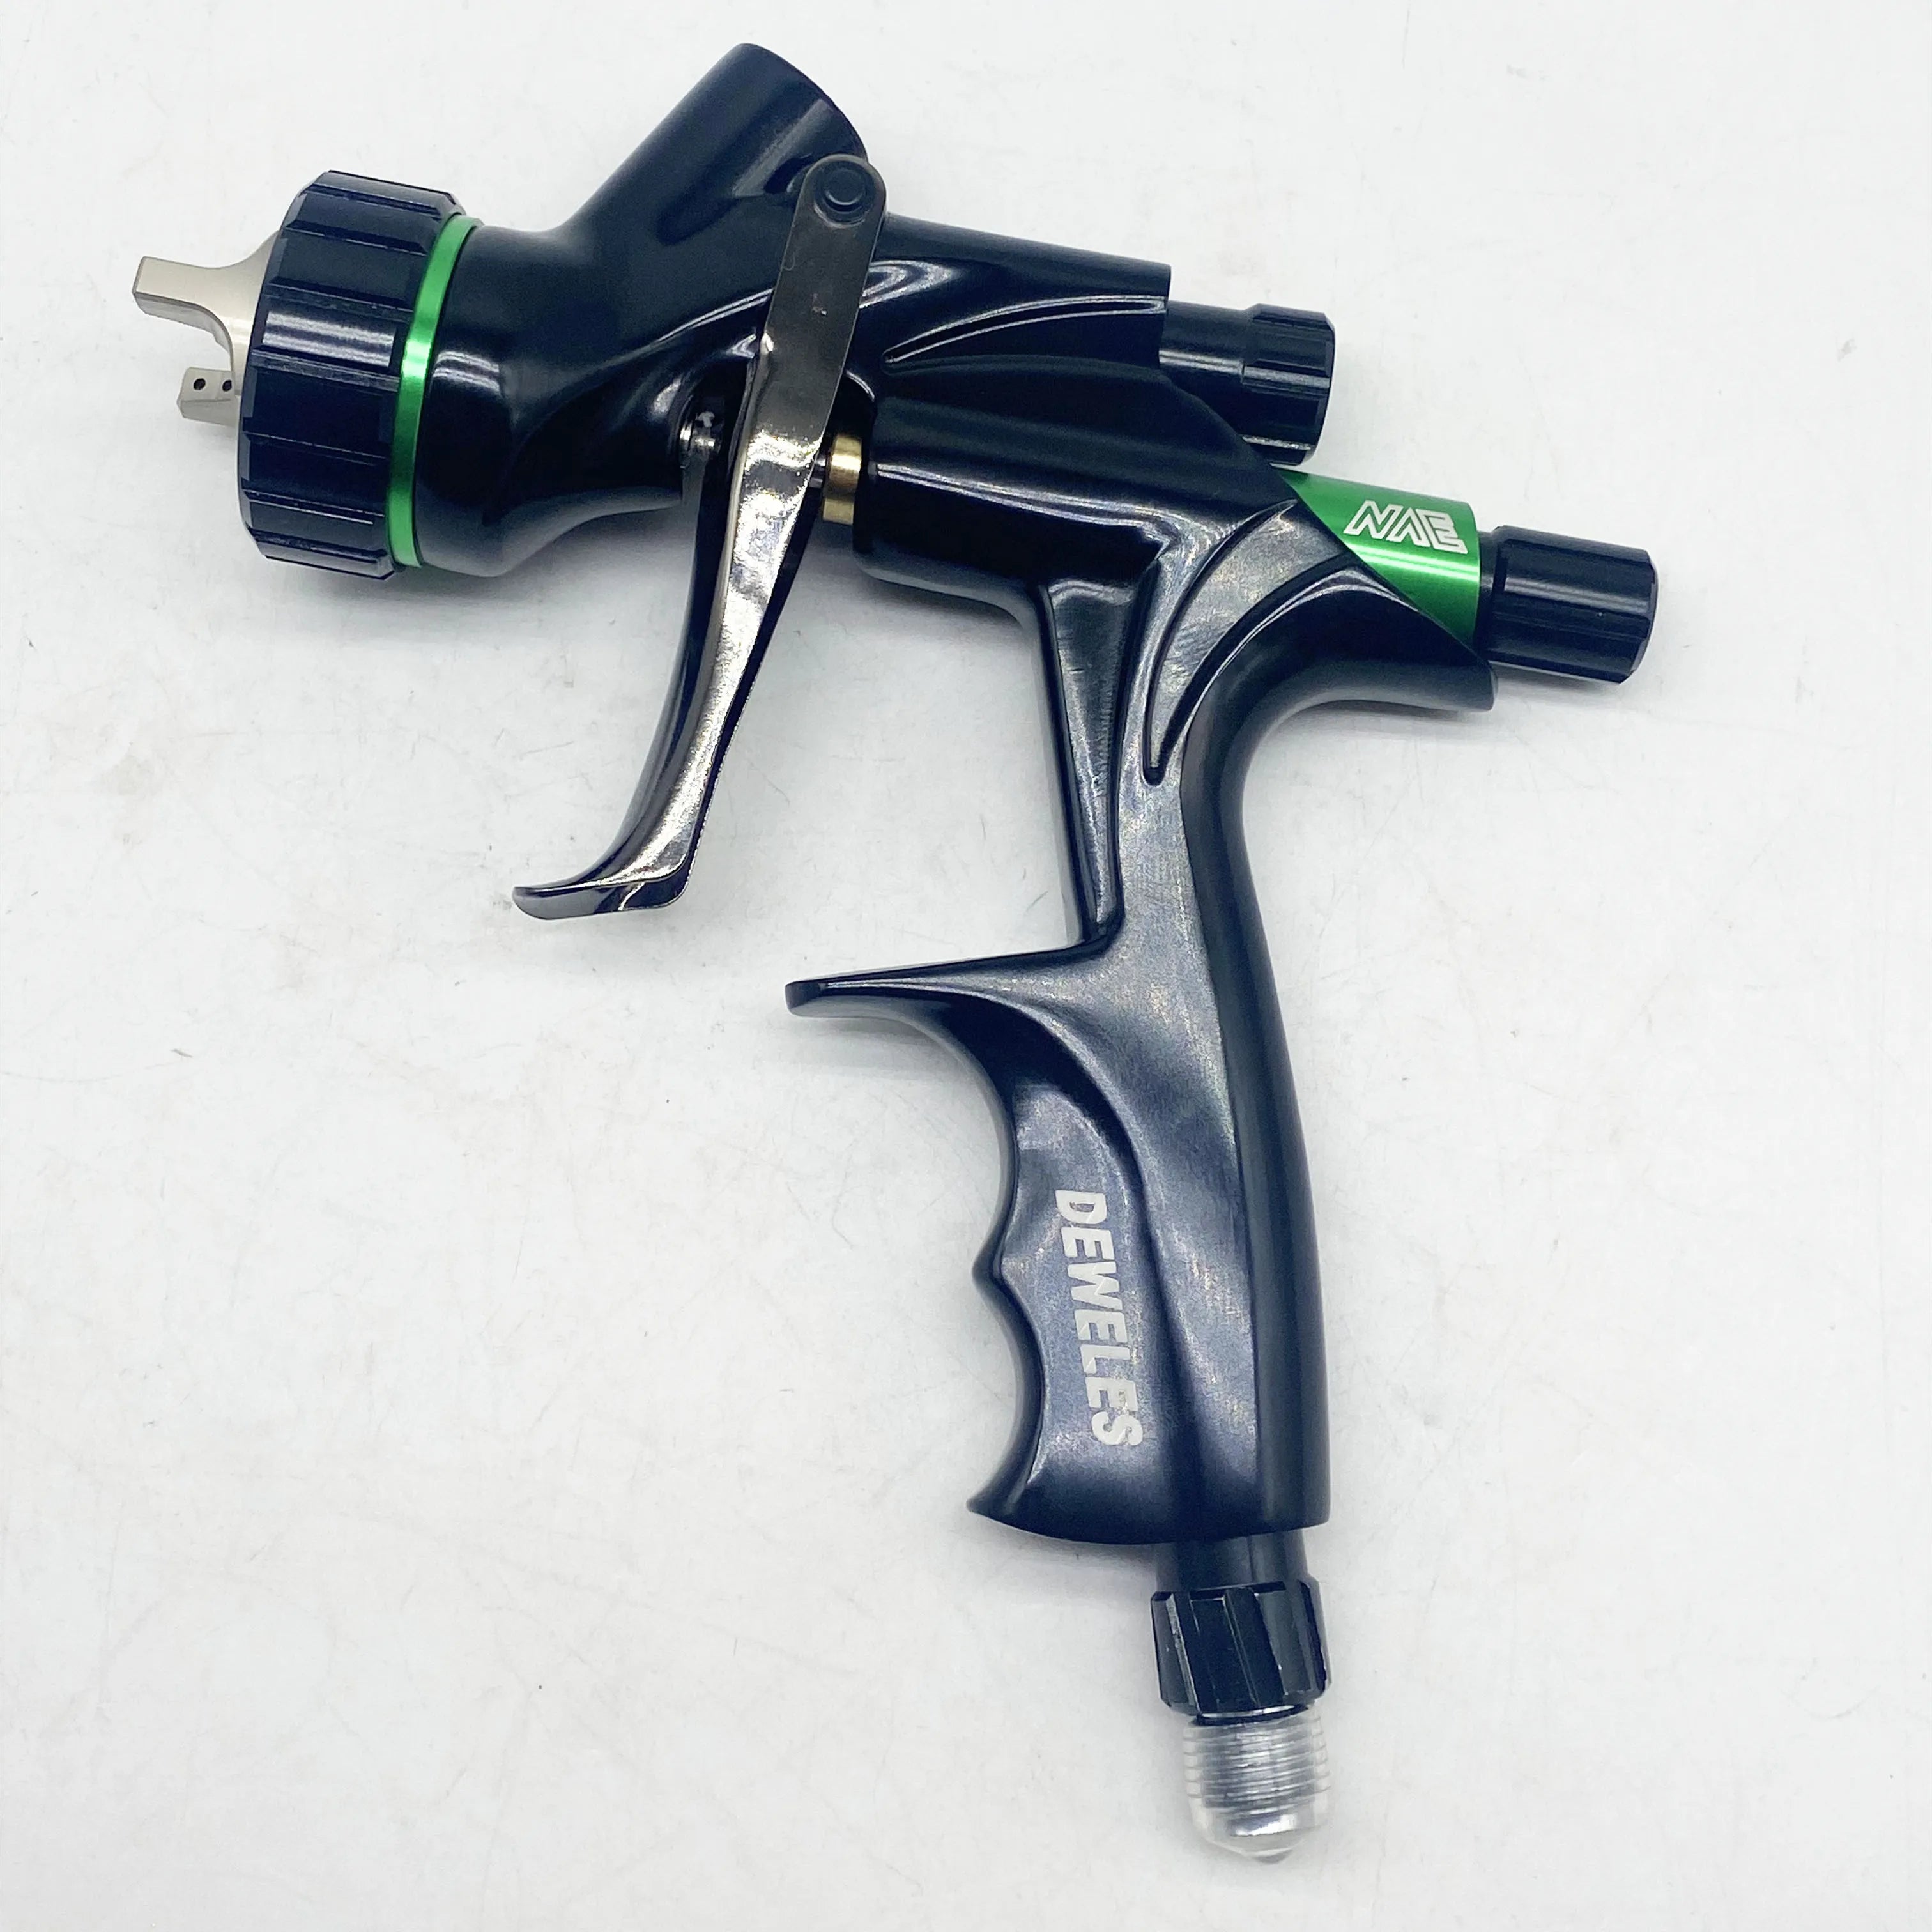 DEWELES Free Shipping High Quality Hvlp Spray Gun 1.3mm Fluid Tip NVE Varnish Paint Sprayer Environmental Protection Air Tools